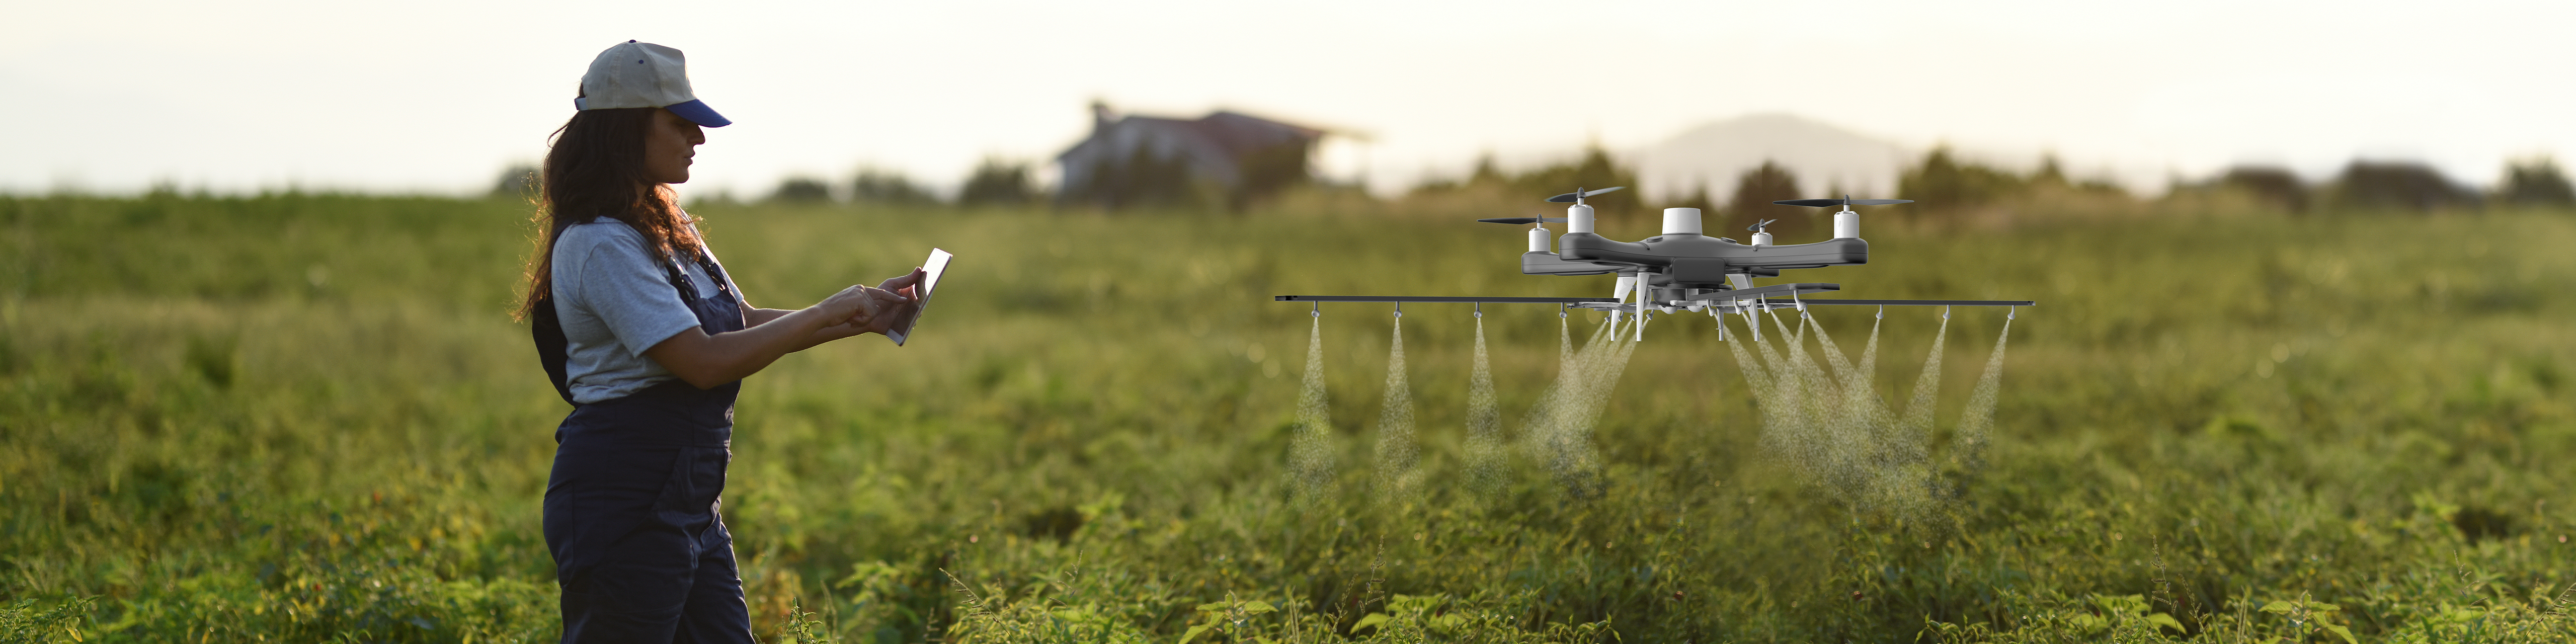 Young female farmer operating smart-farming drone